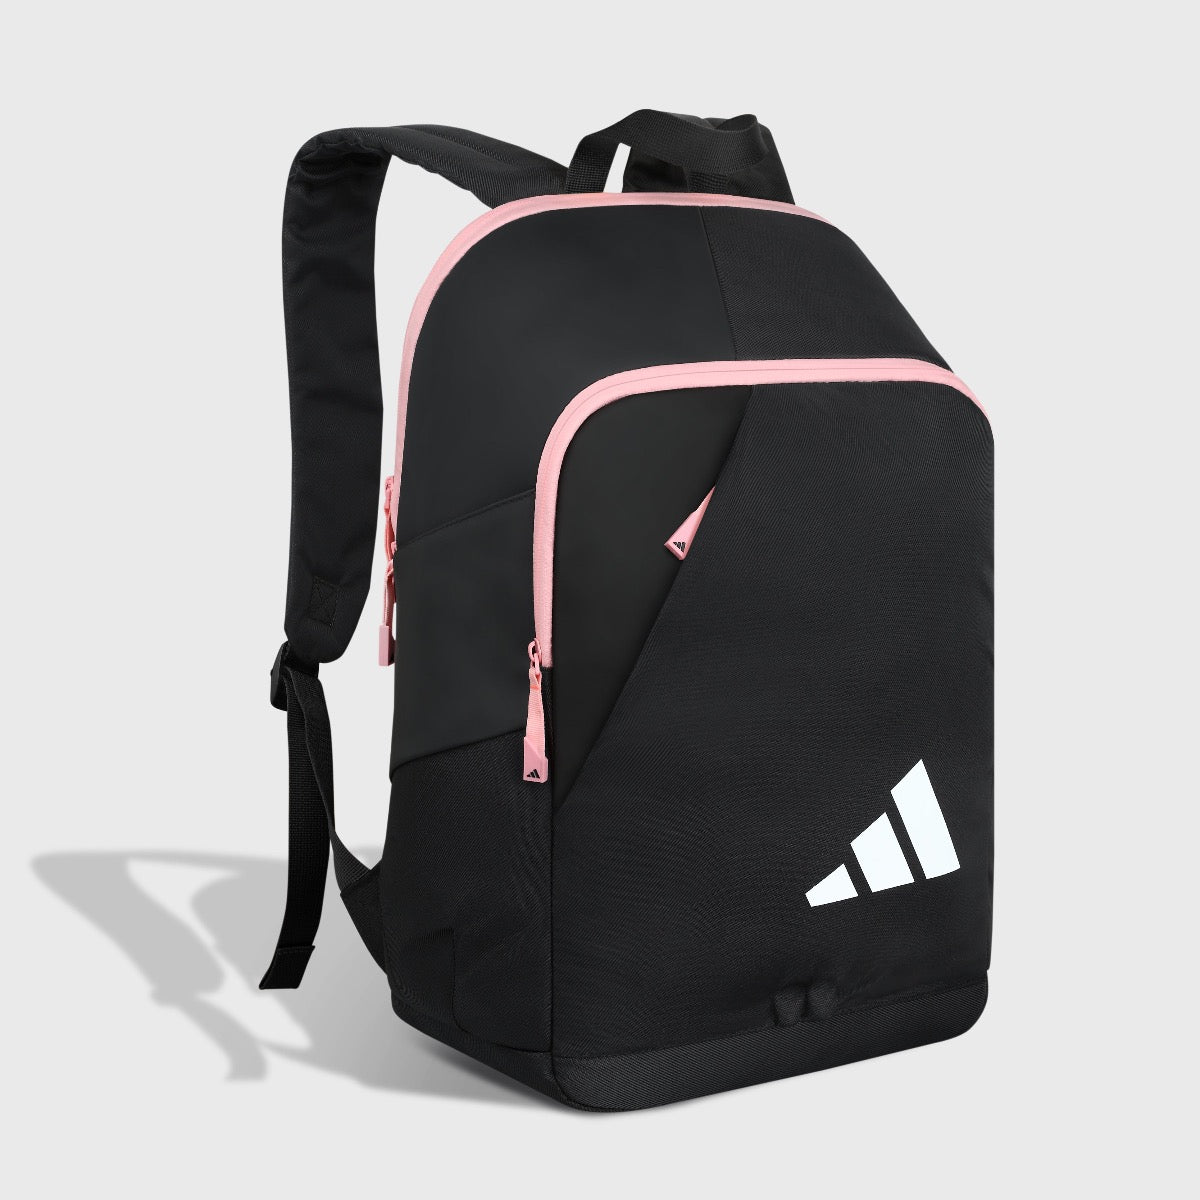 Adidas VS .6 Hockey Backpack Black/Pink - ONE Sports Warehouse